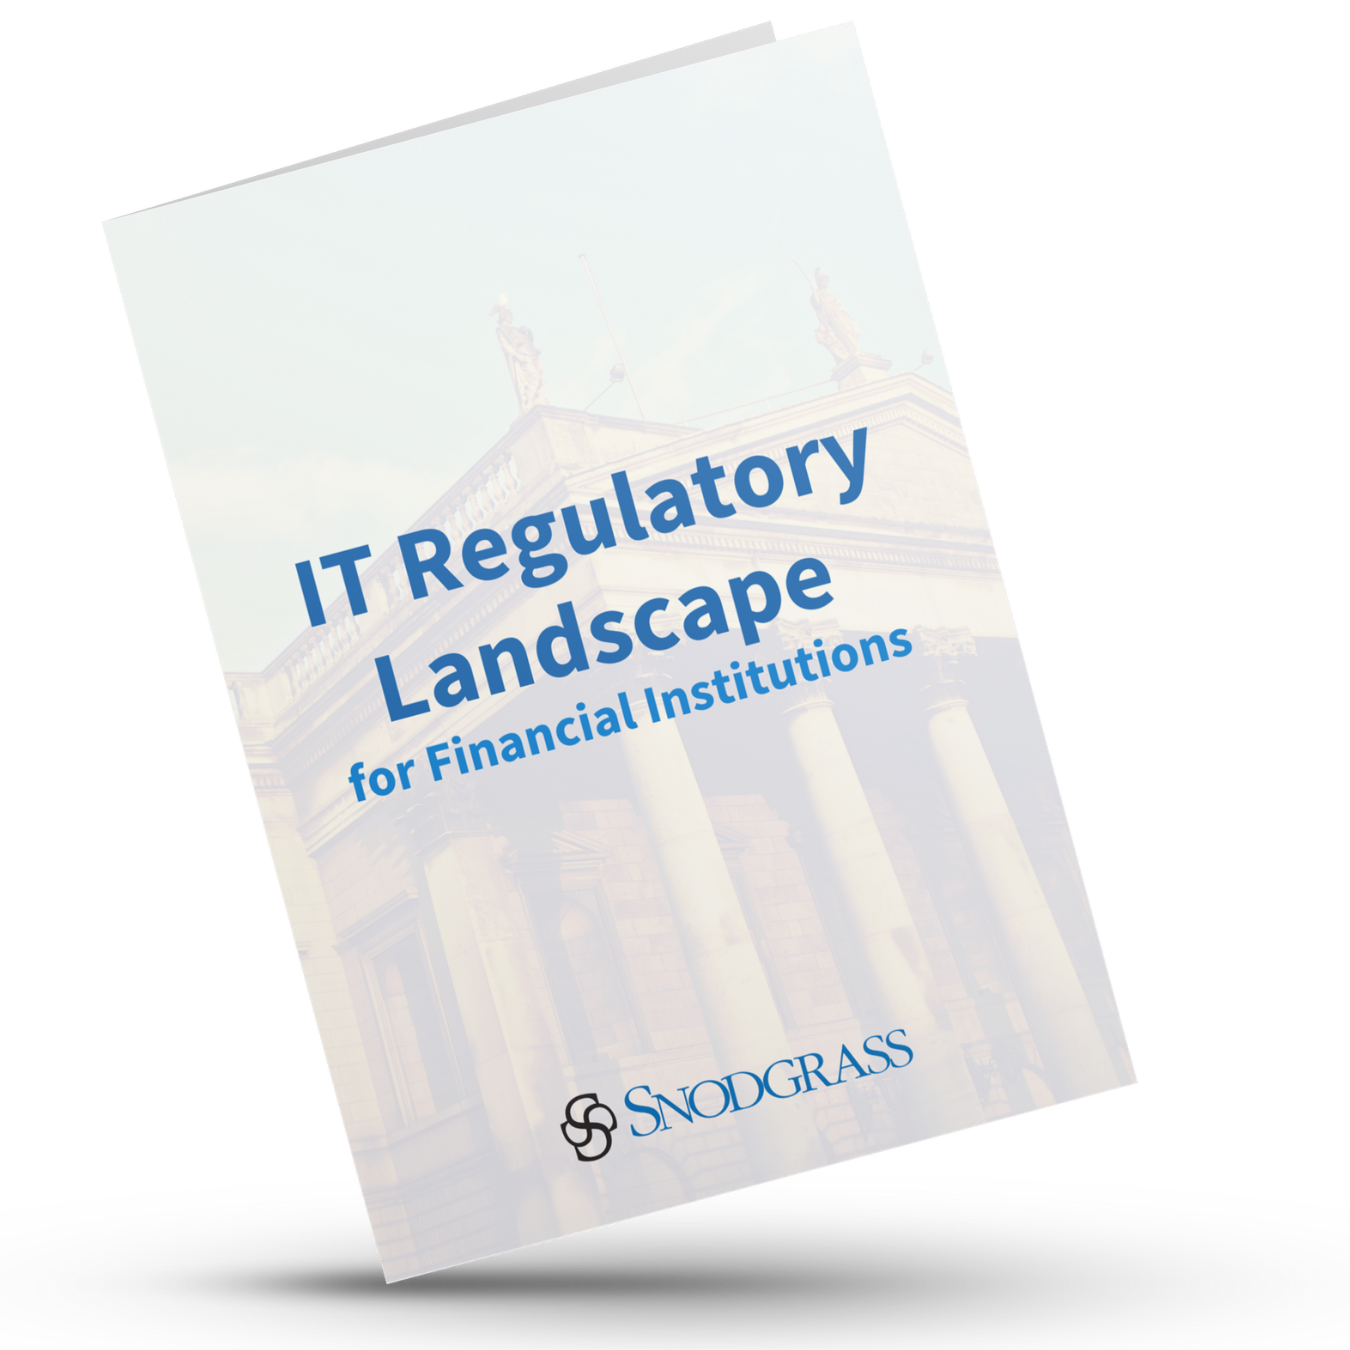 IT Regulatory Landscape